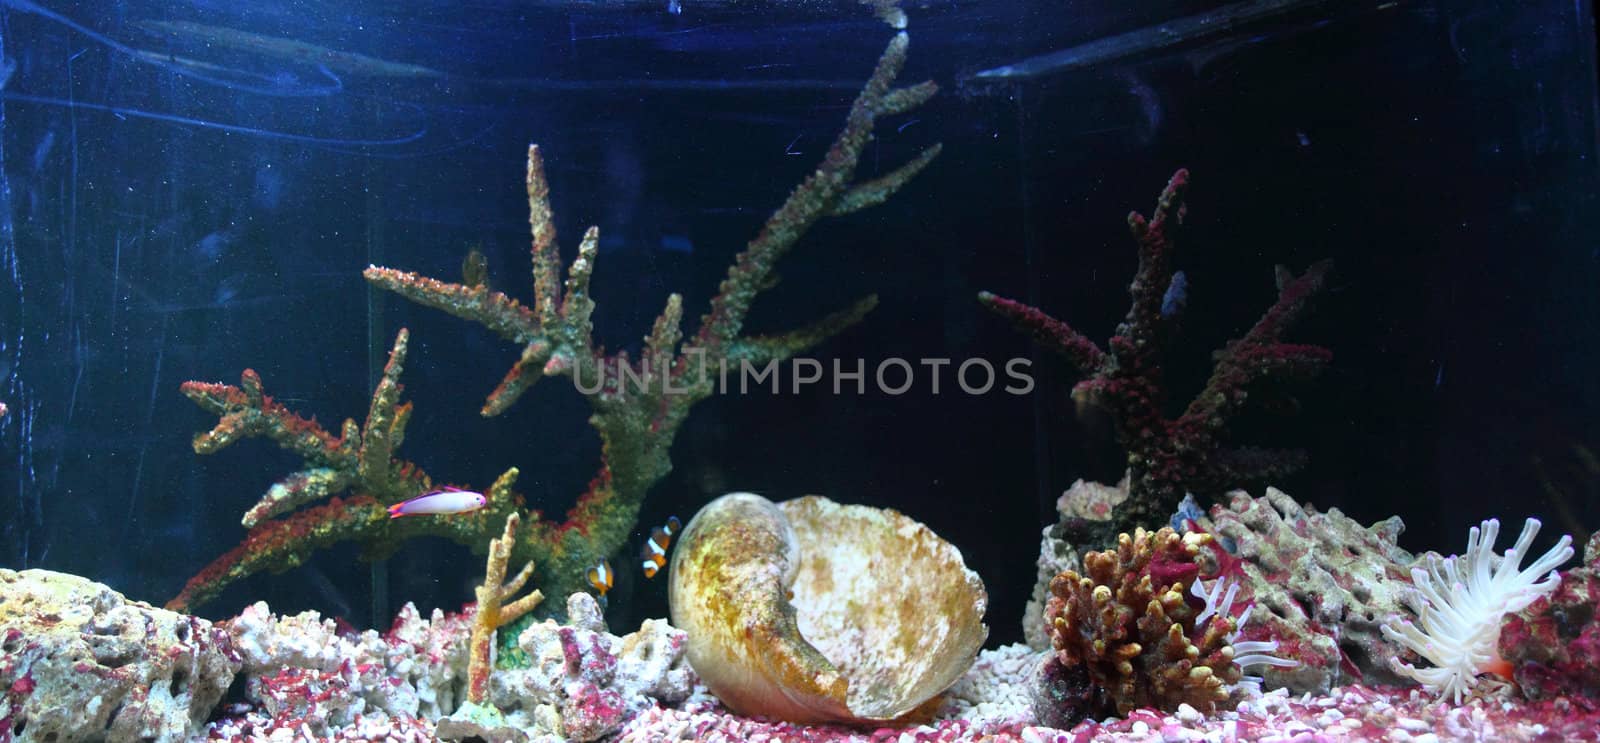 aquarium background by jonnysek